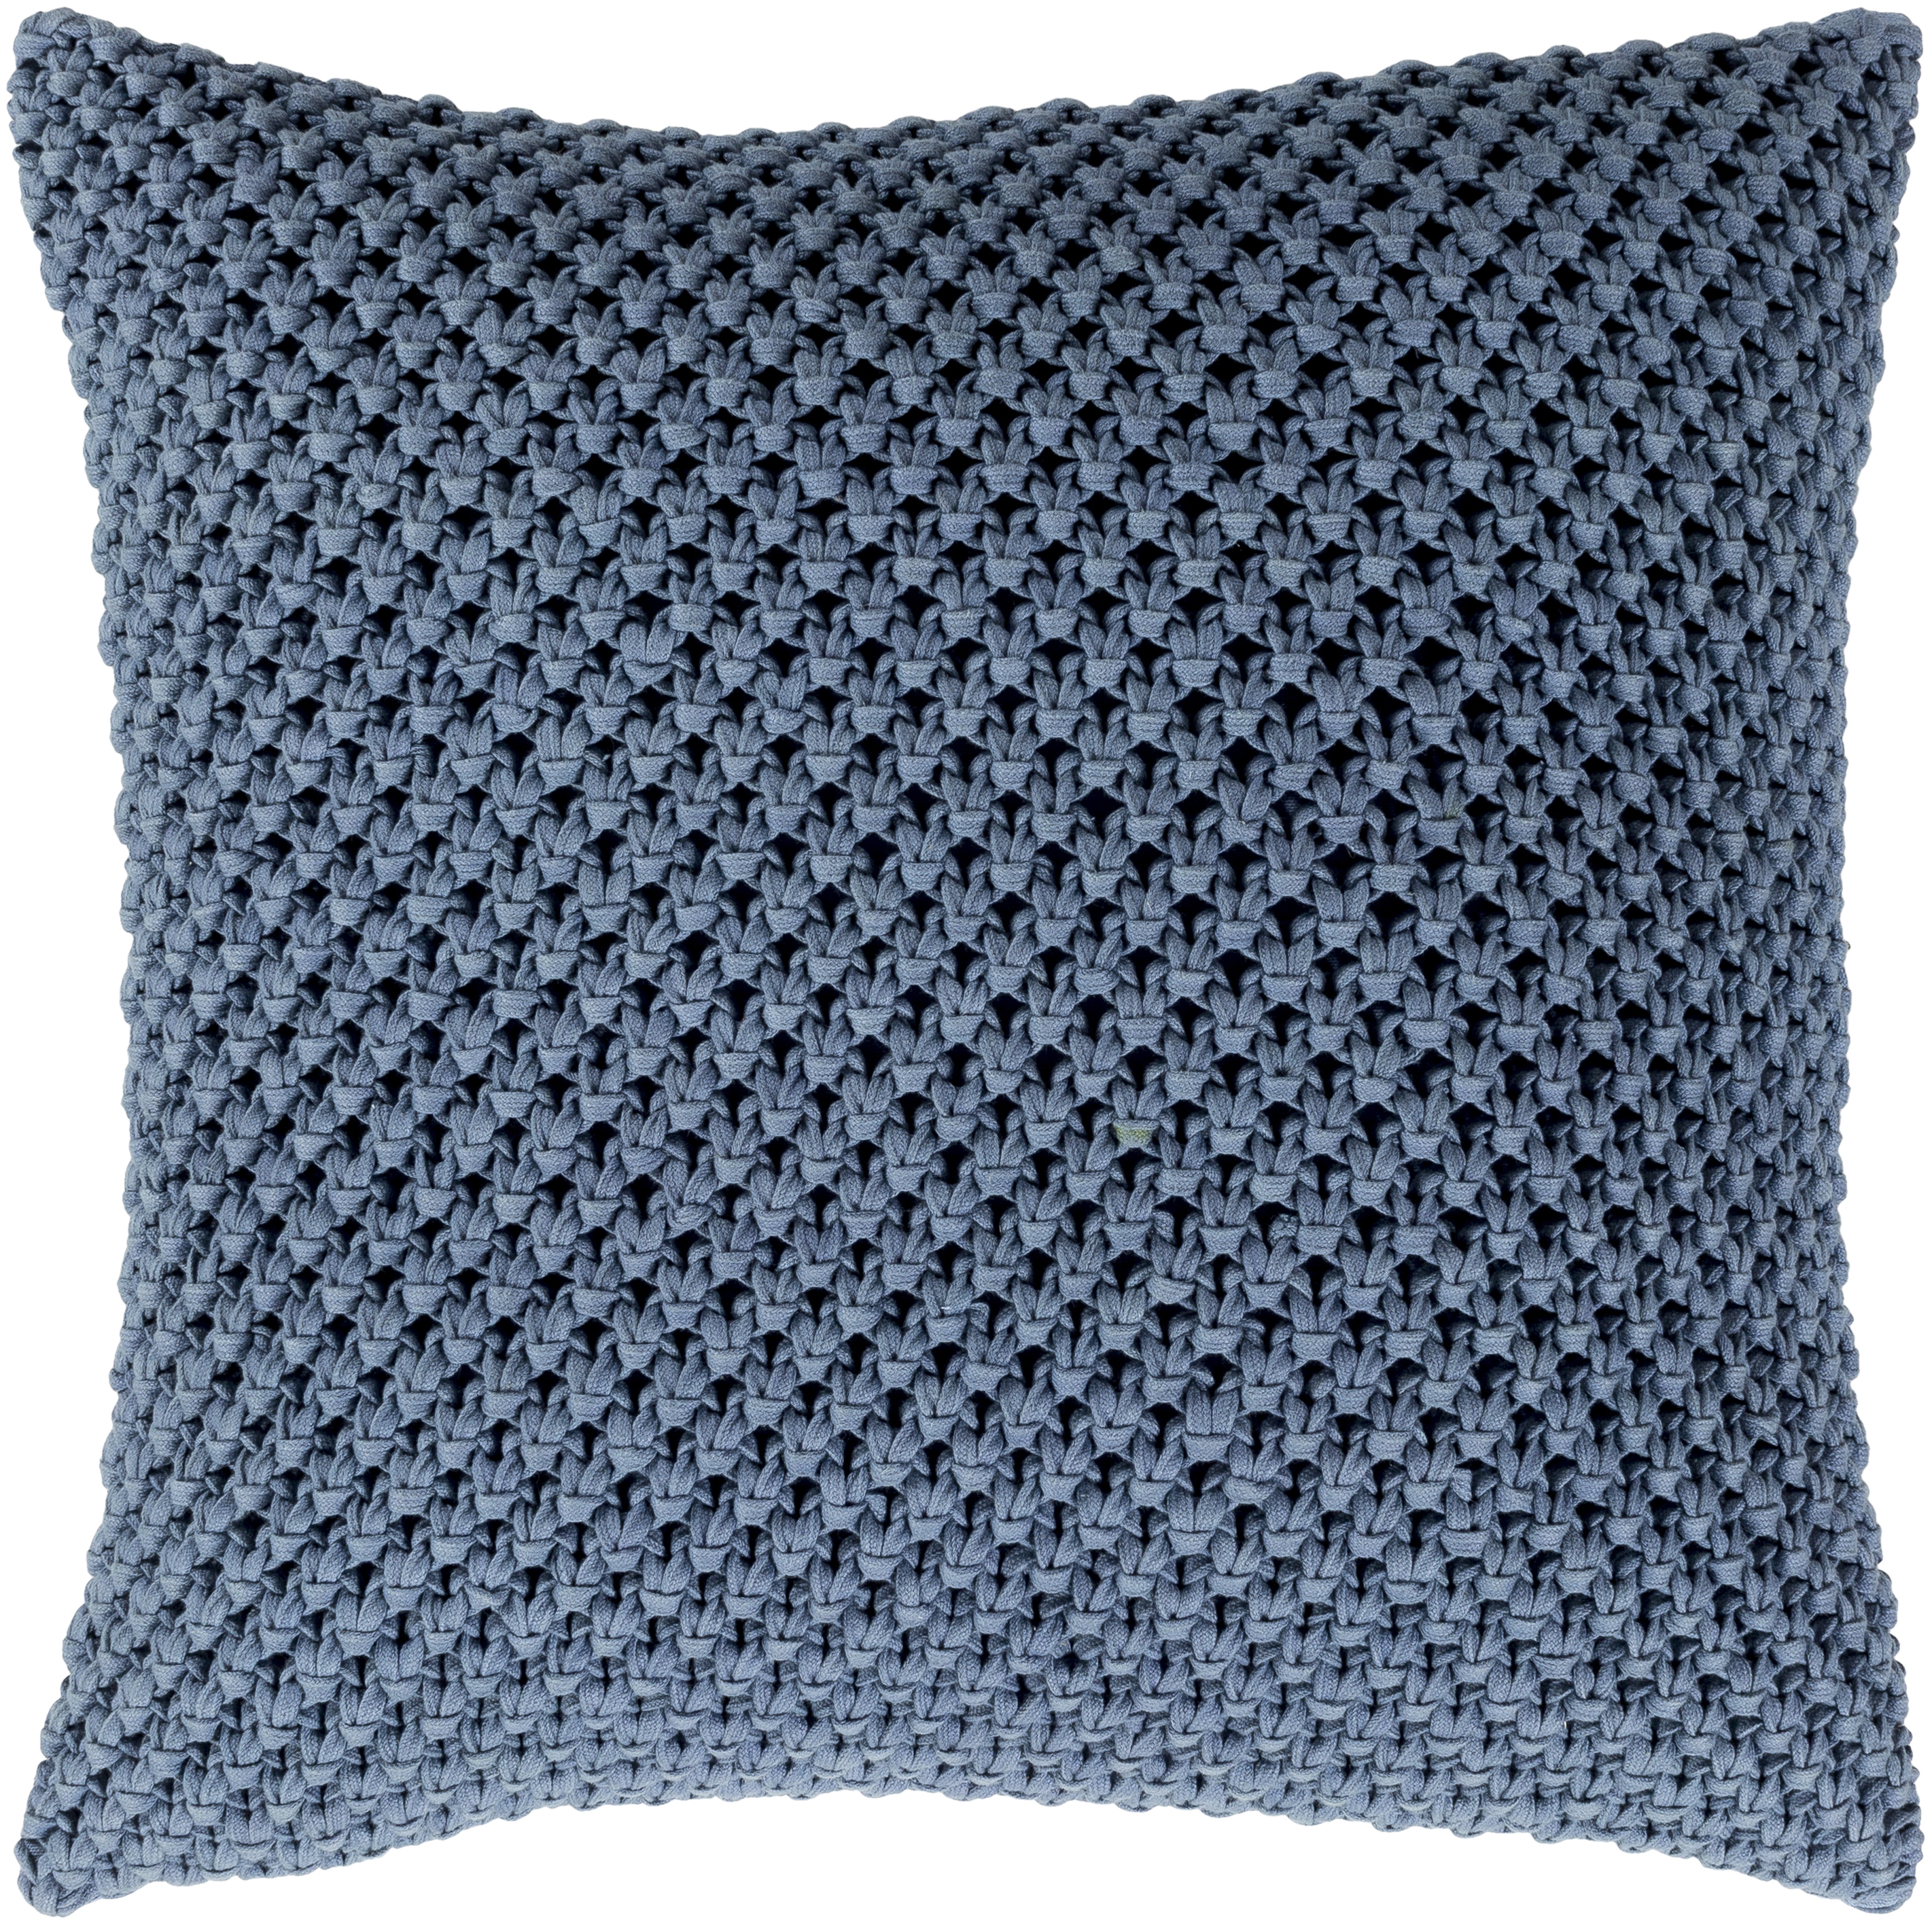 Godavari Throw Pillow, 18" x 18", with poly insert - Image 0